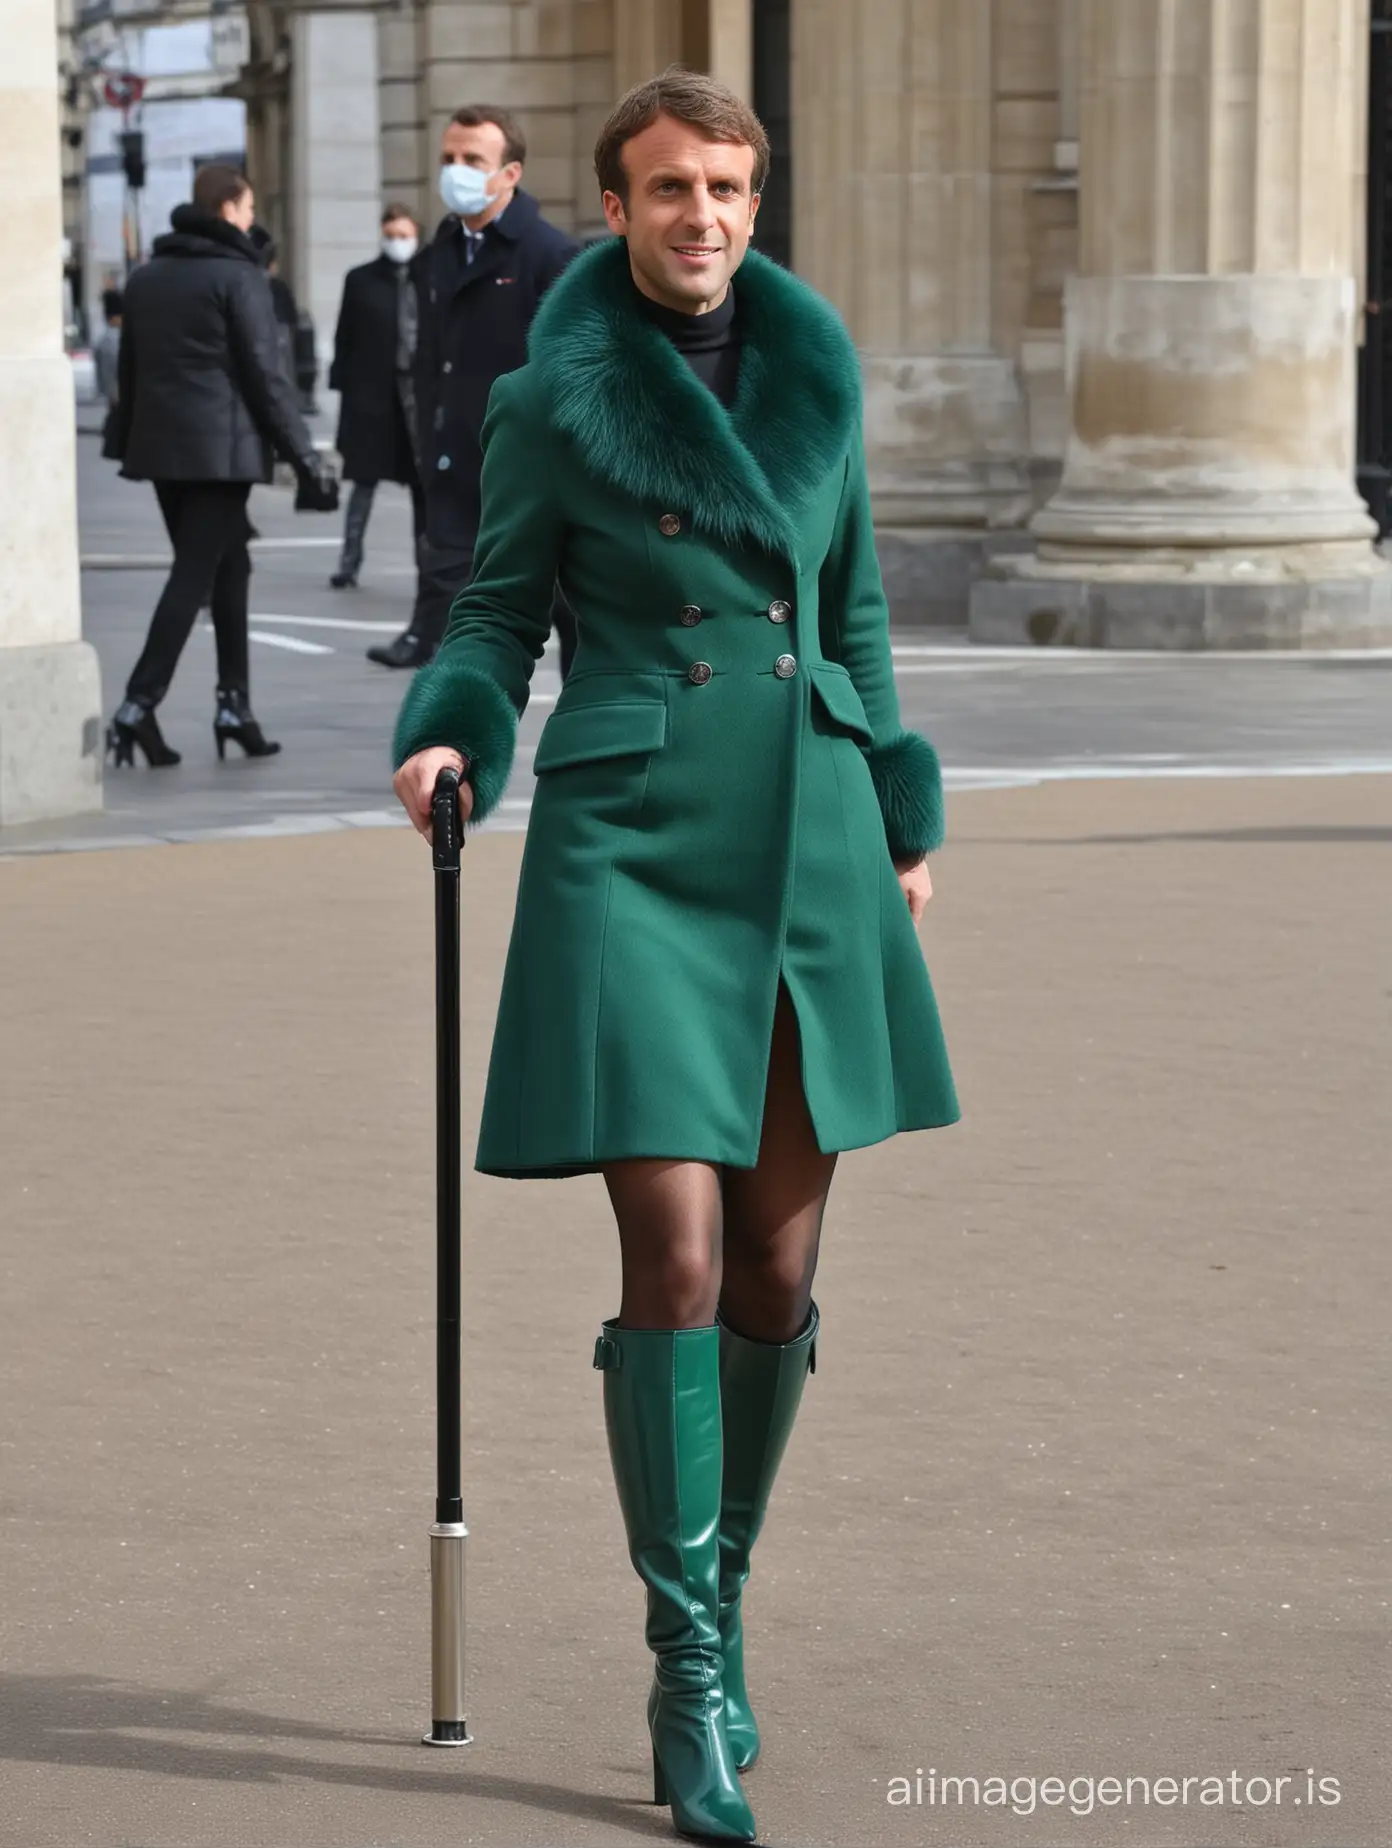 emmanuel macron in green high heels over the knee boots mesh thigh vinyl skirt and fur coat